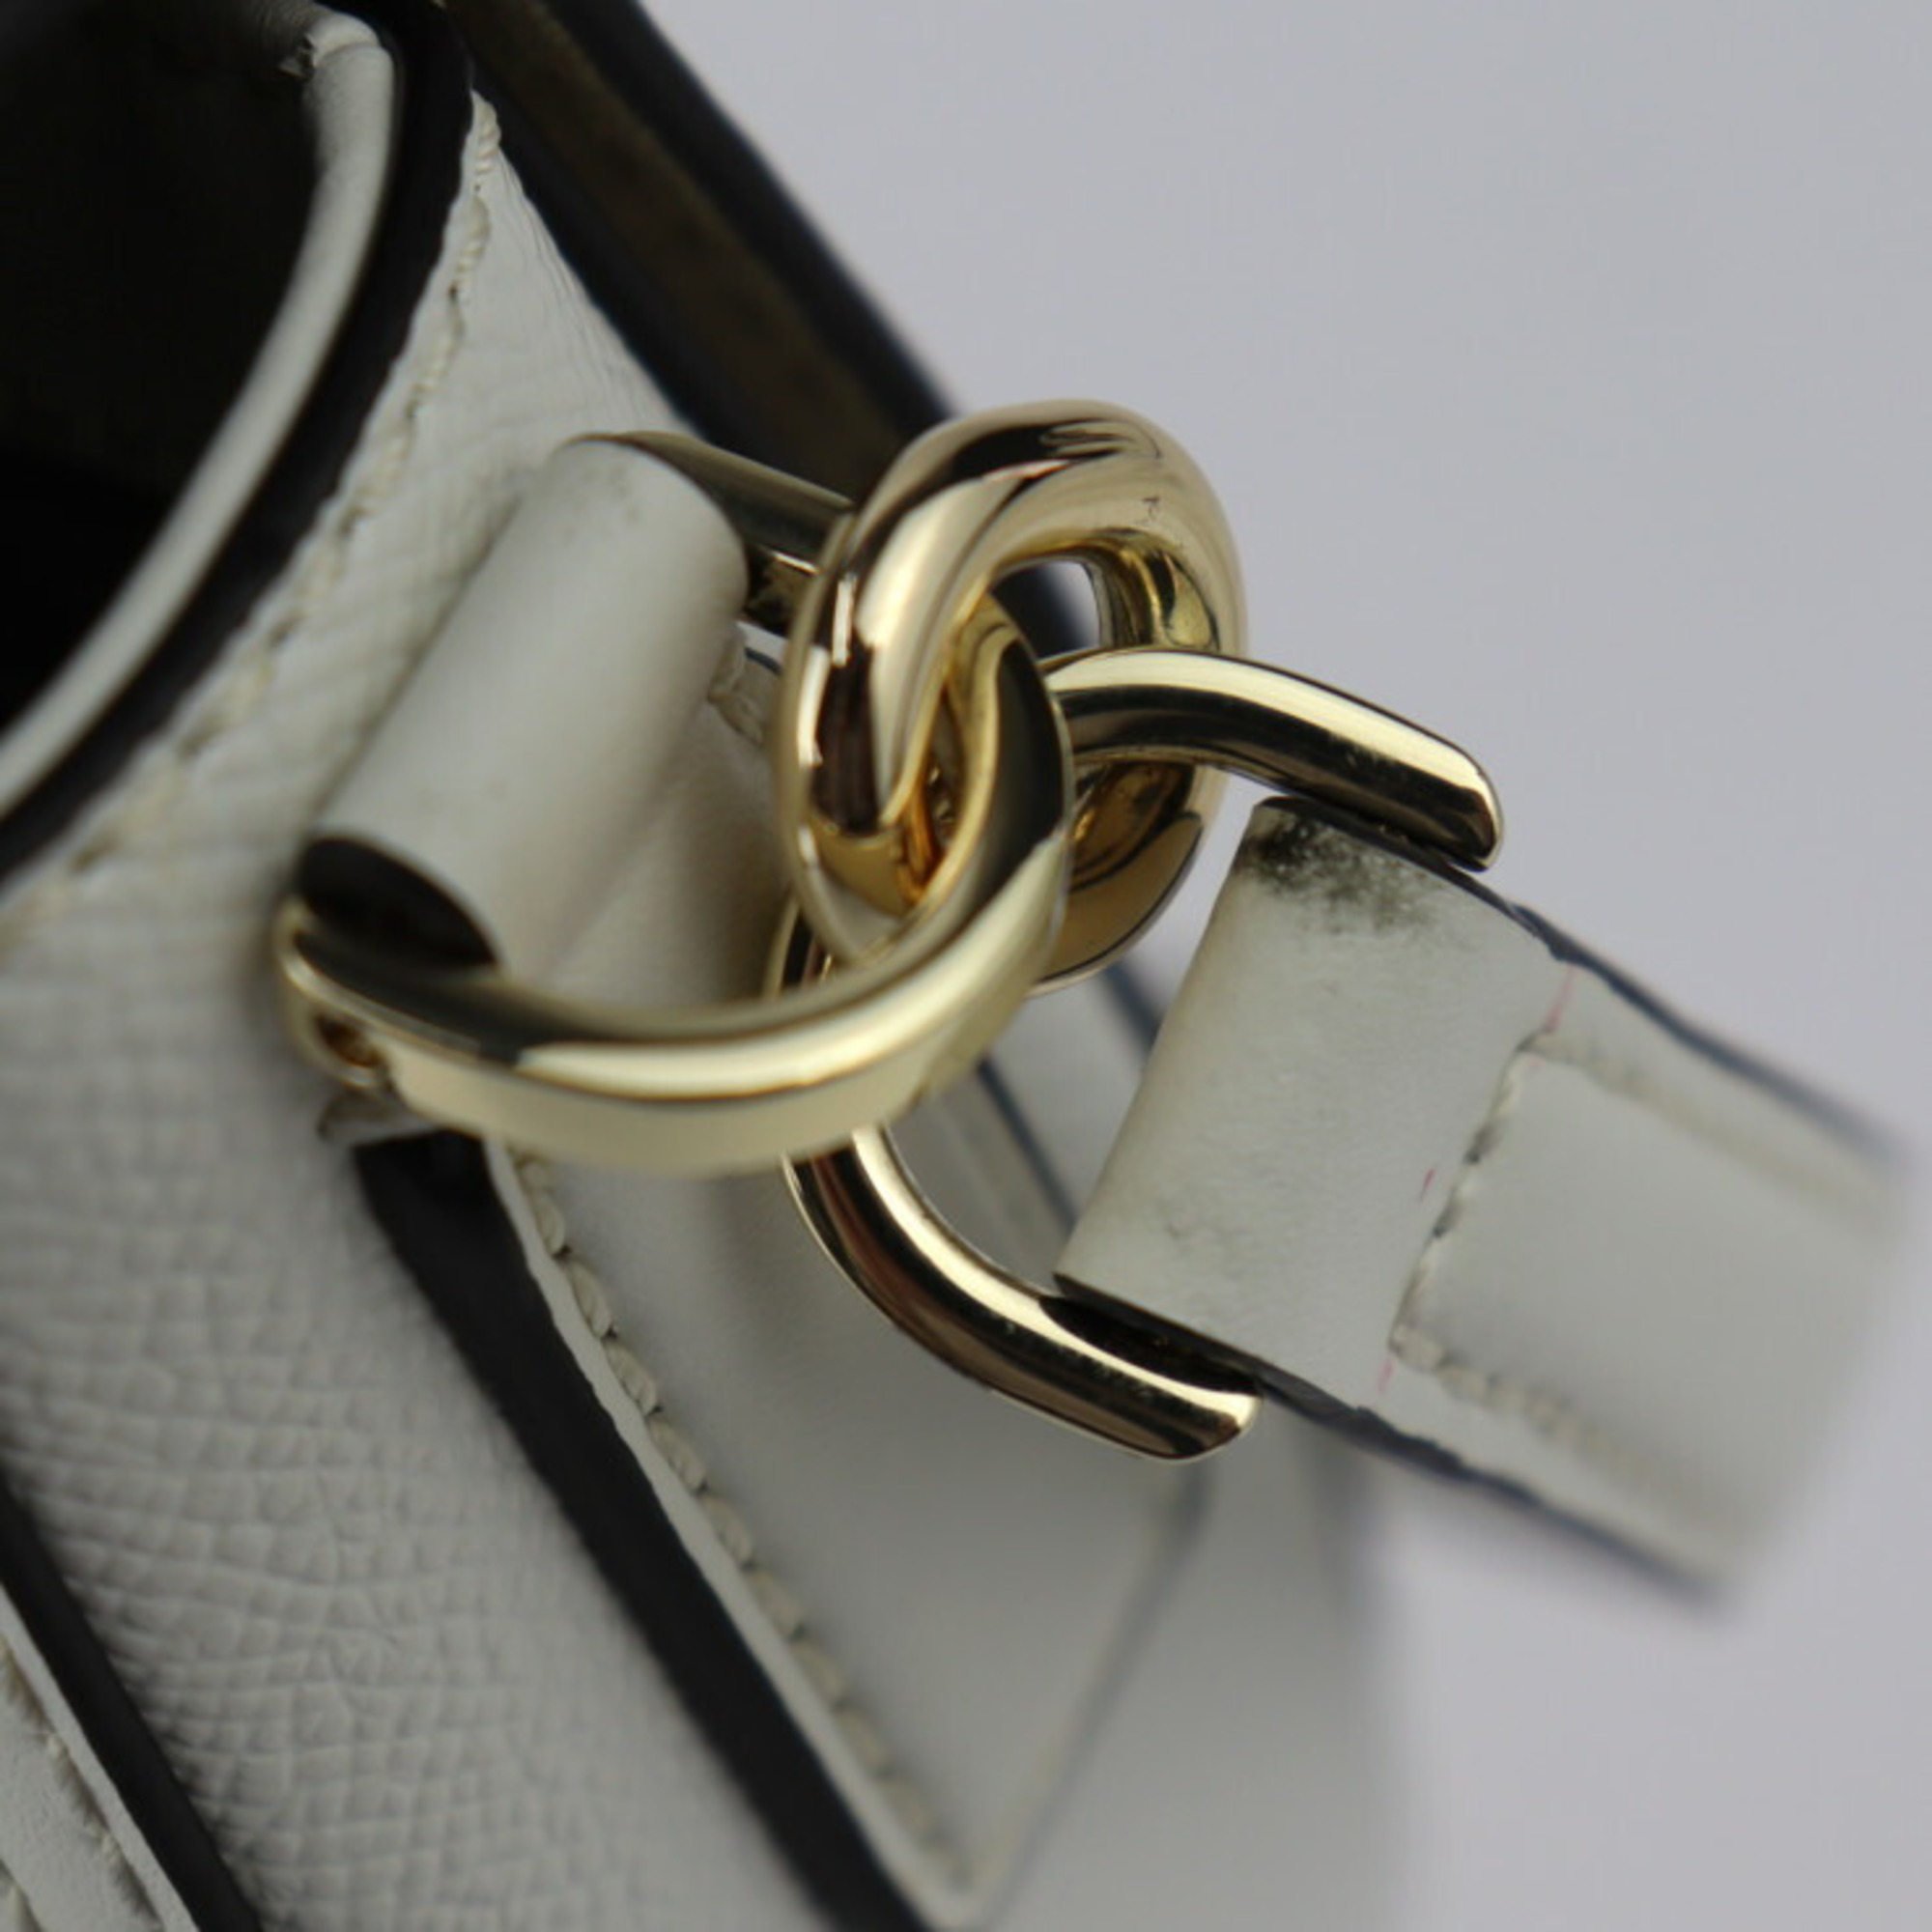 Furla CIRCE Crossbody S Handbag WB00641 Leather Ivory Shoulder Bag Pochette